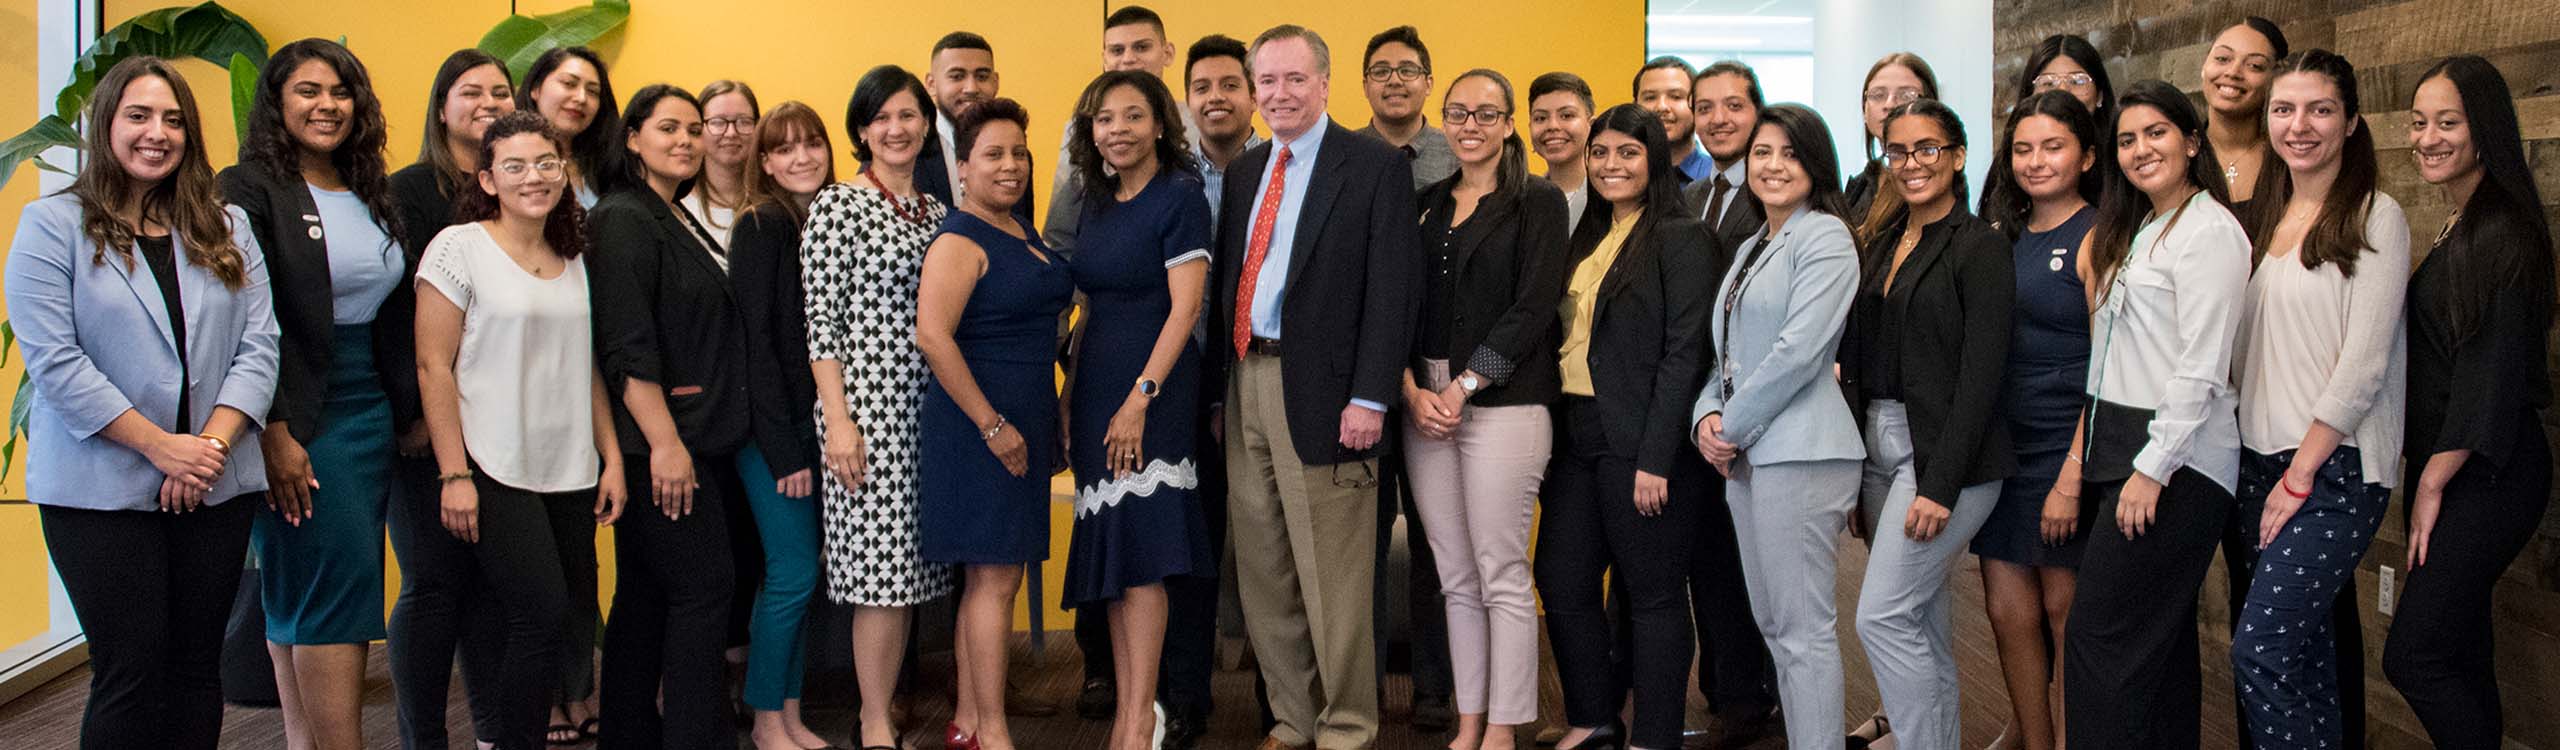 Governor's Hispanic Fellows Program